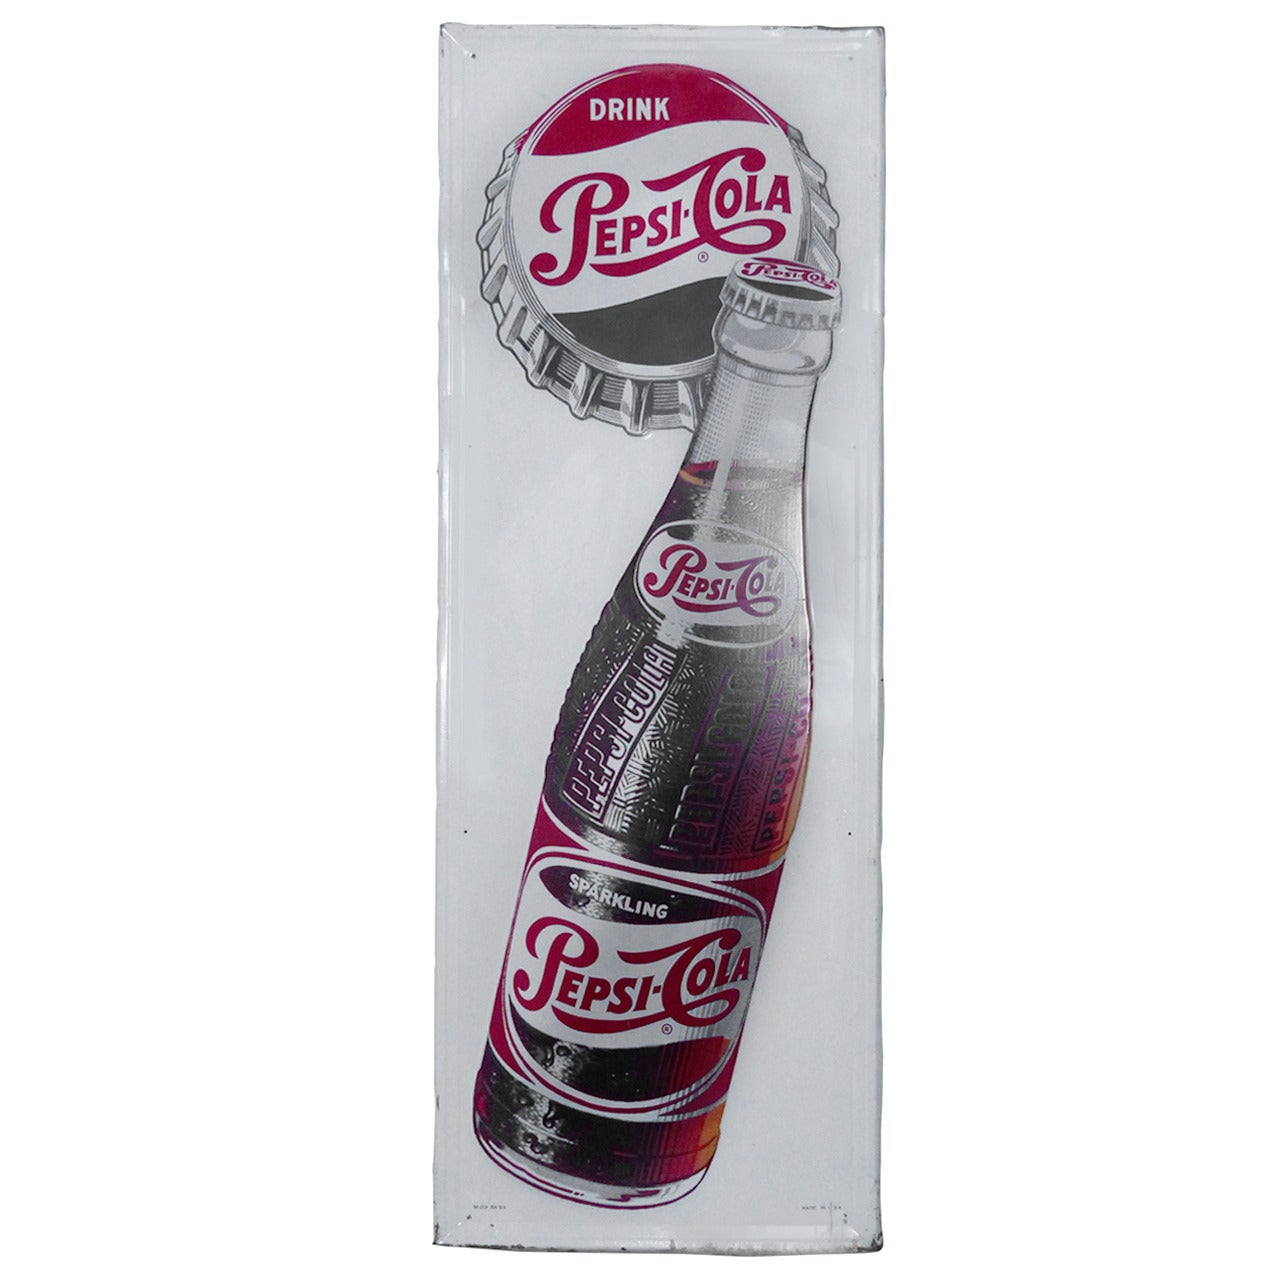 1953 tin advertising sign Pepsi-cola